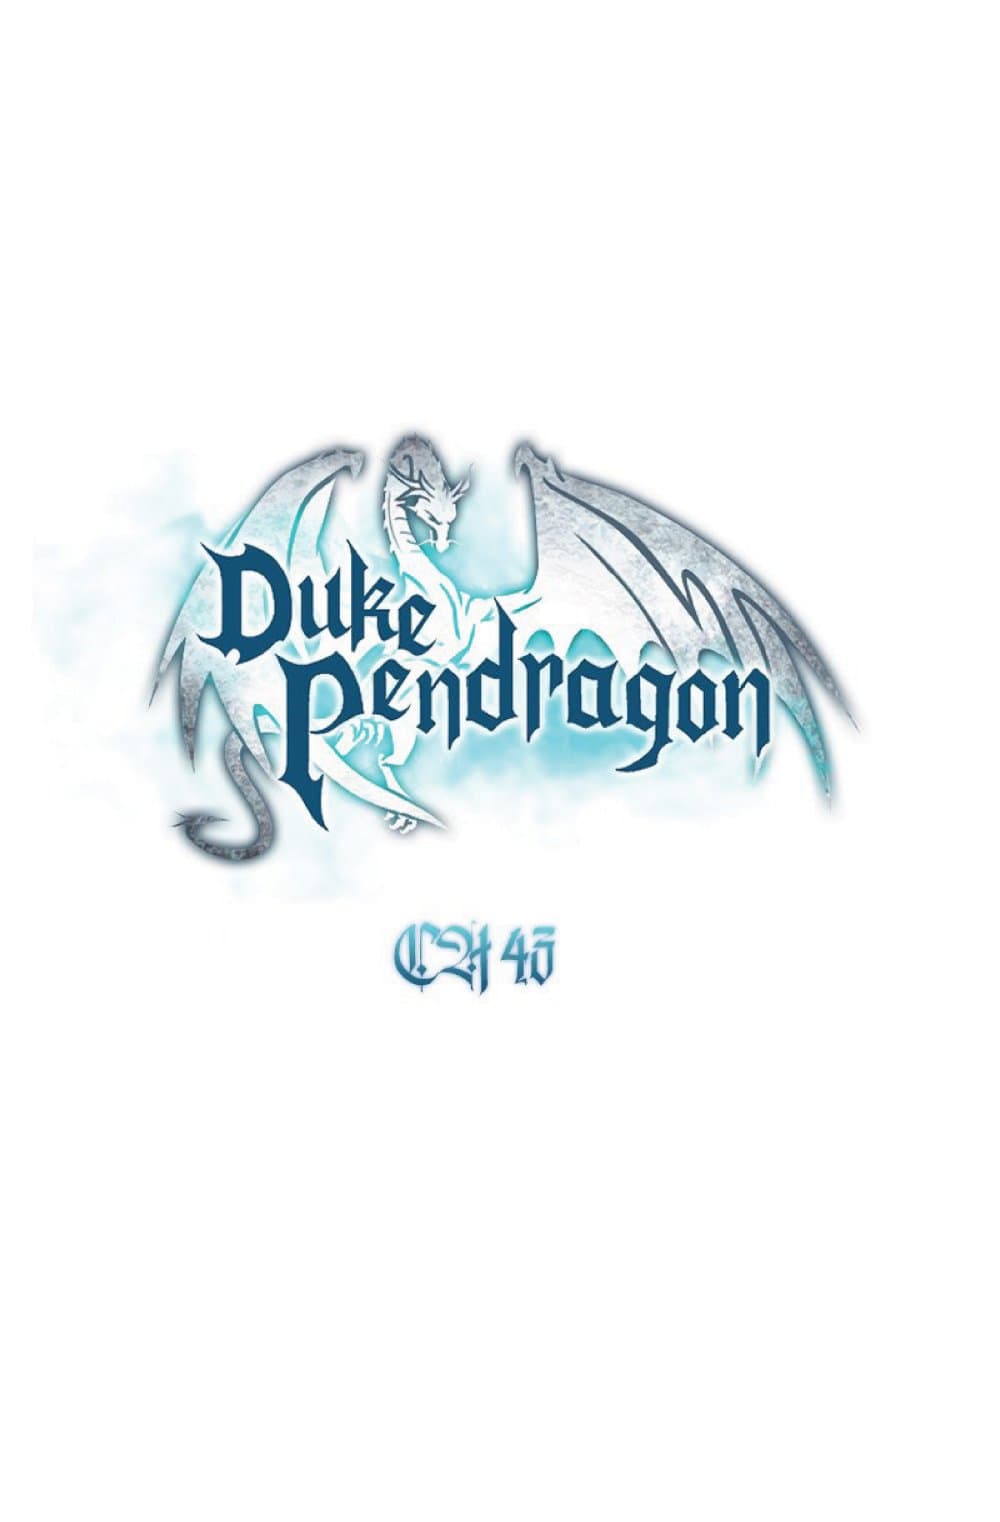 Duke Pendragon 43 001